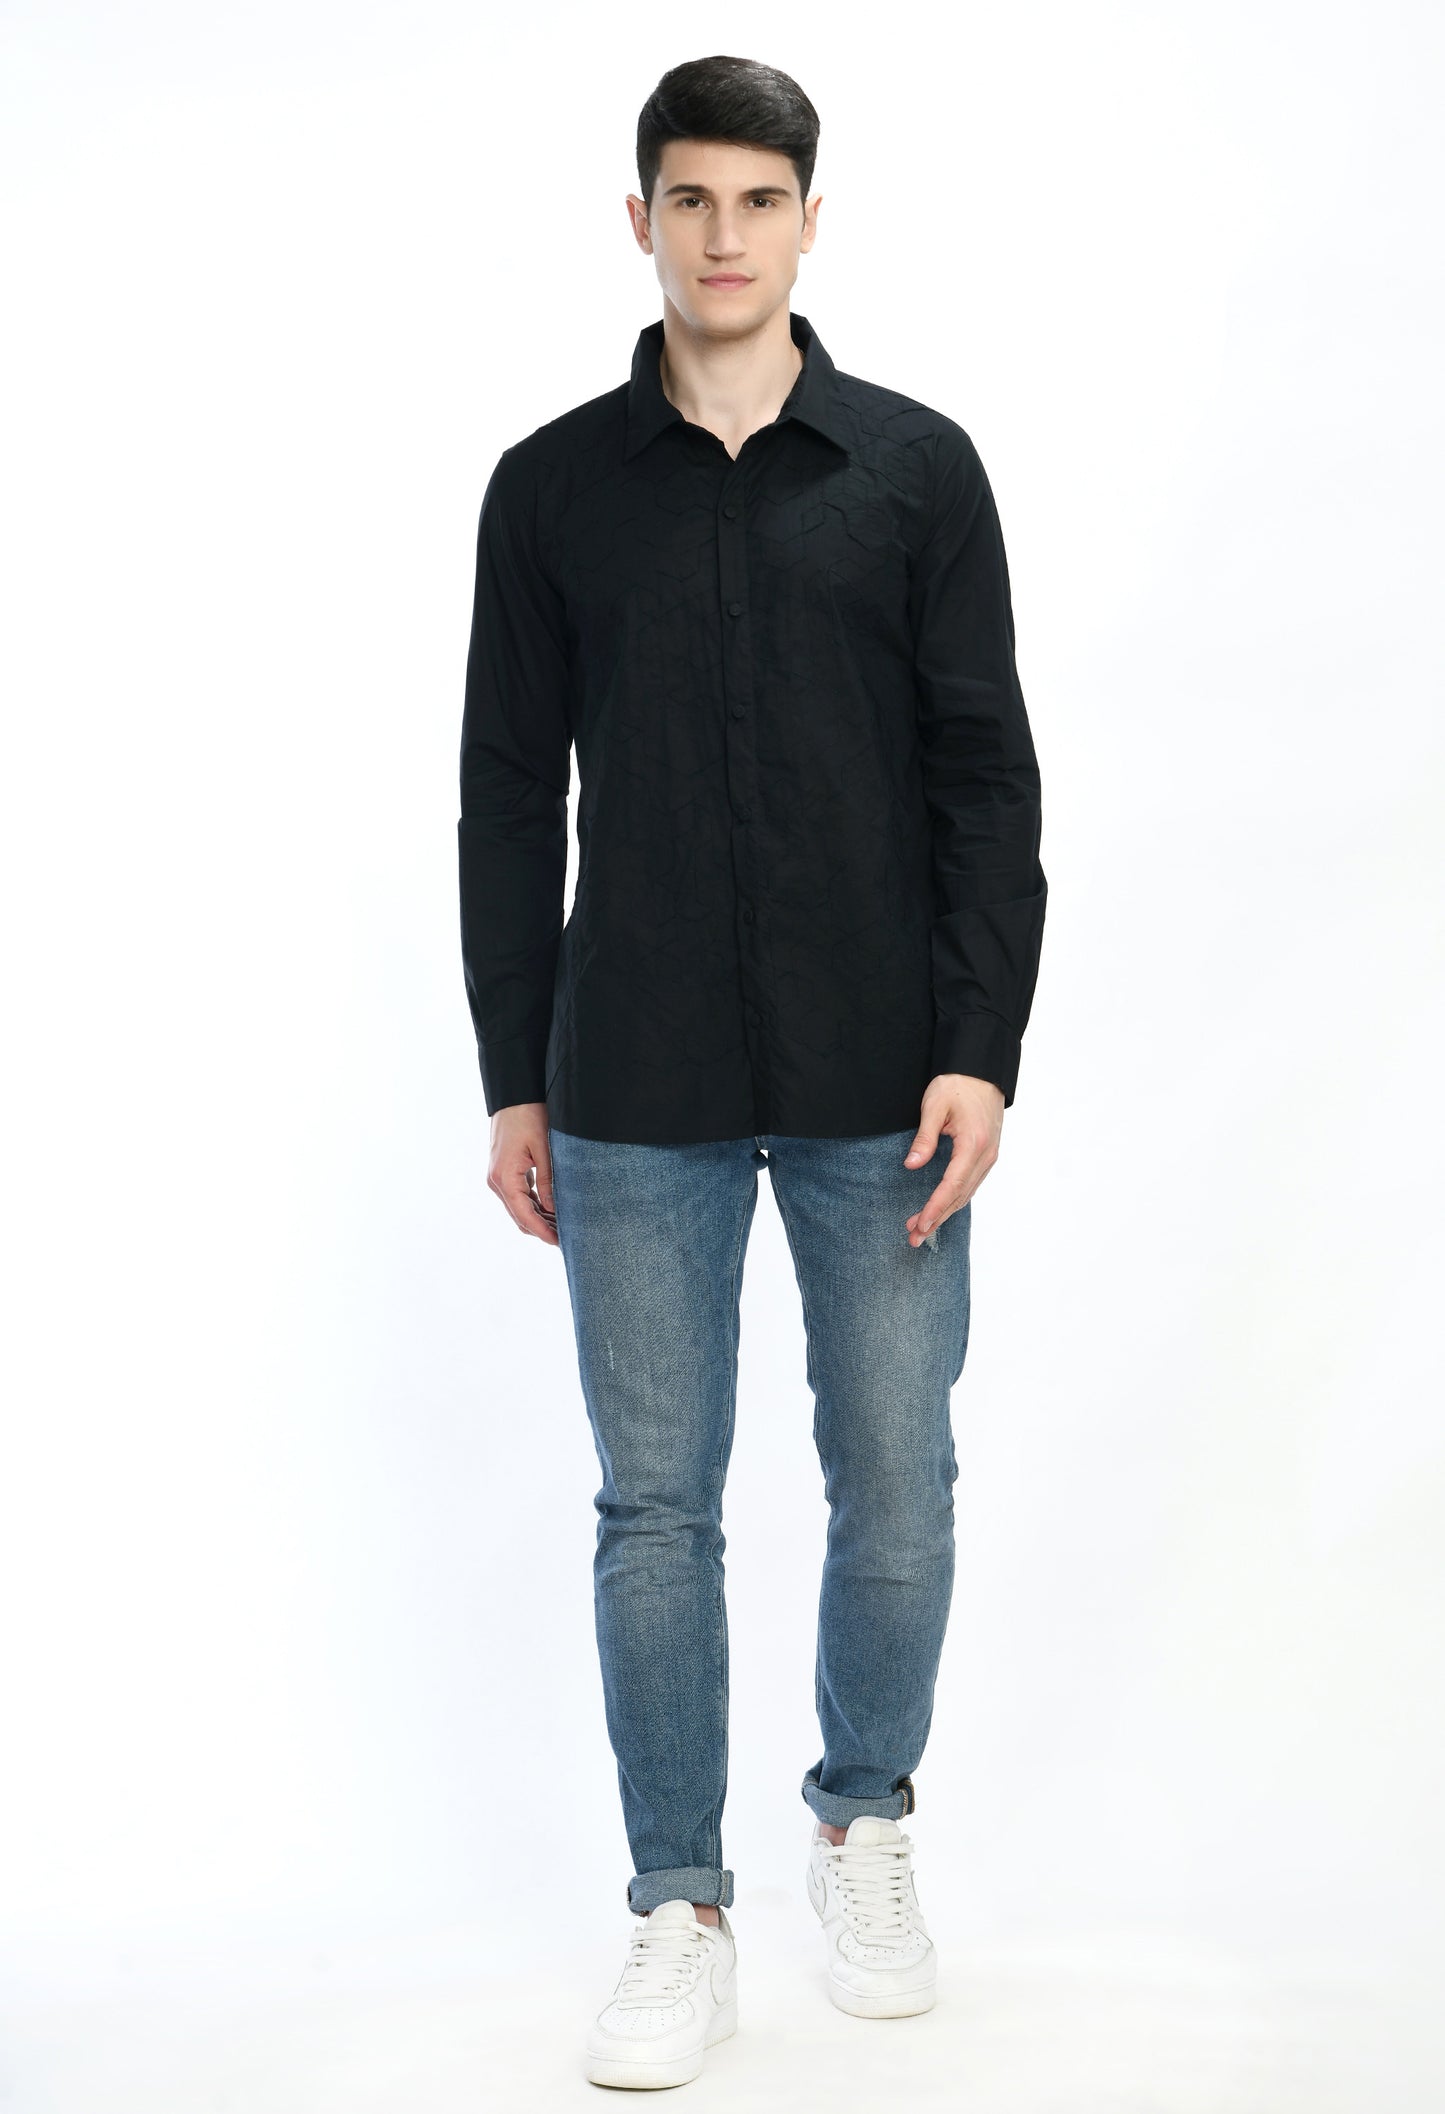 A black cotton shirt showcasing tone on tone appliqué work.